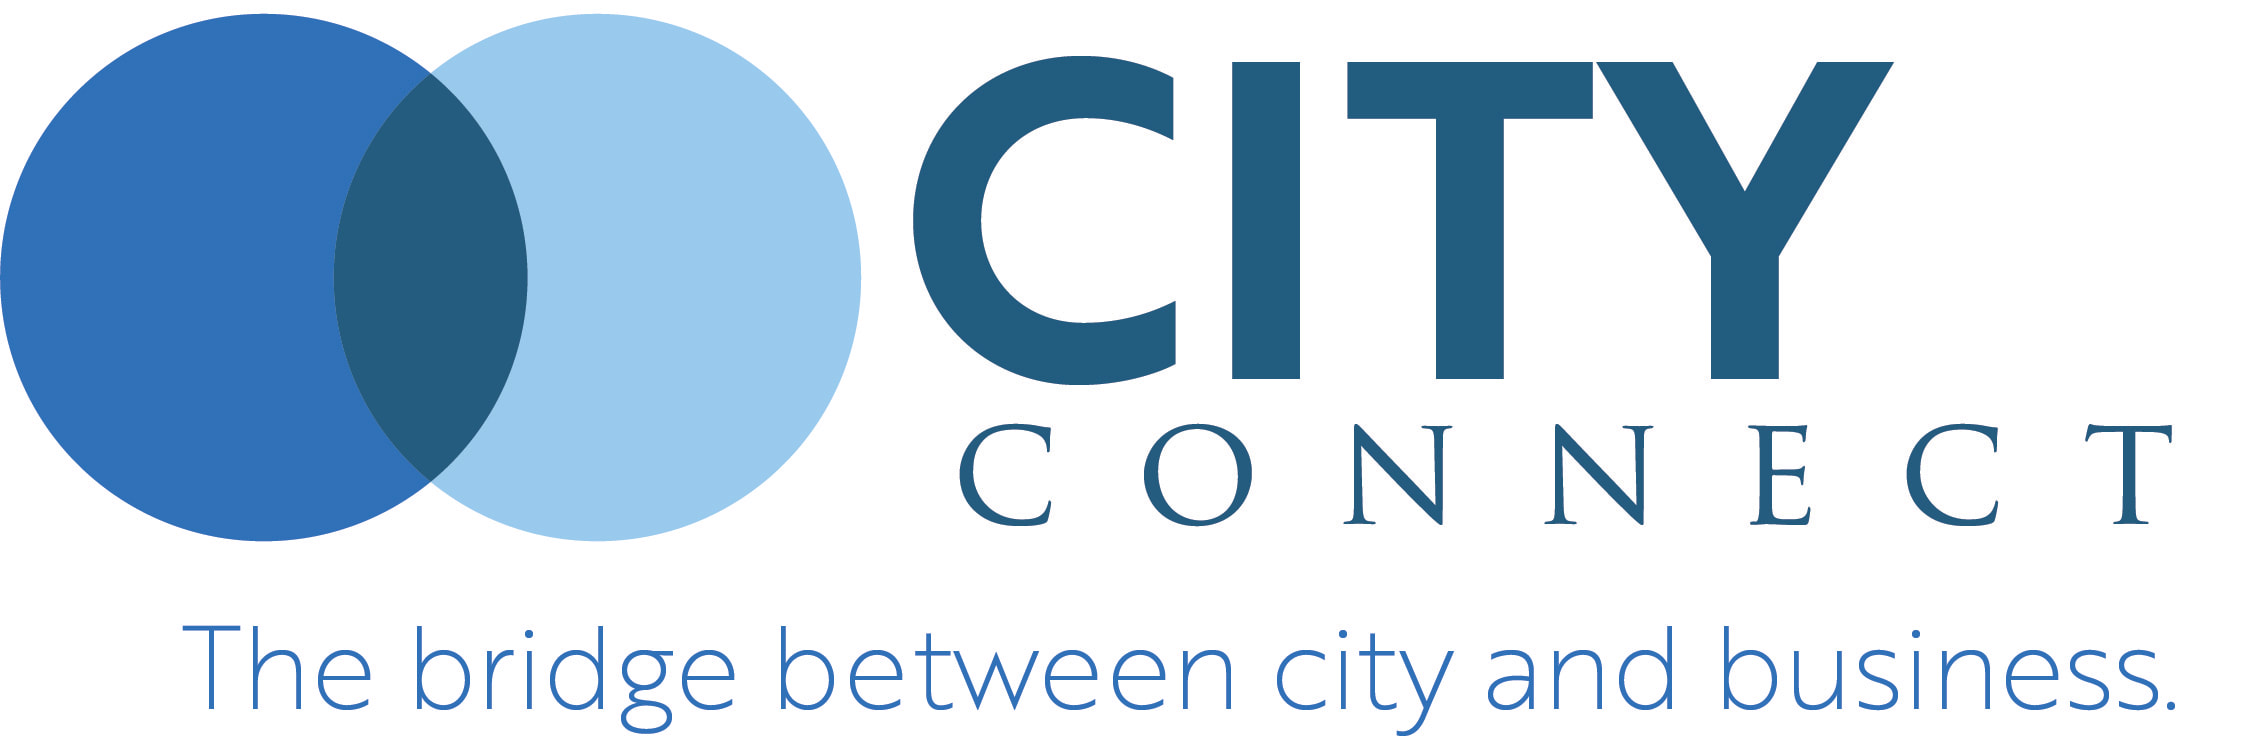 City Connect 